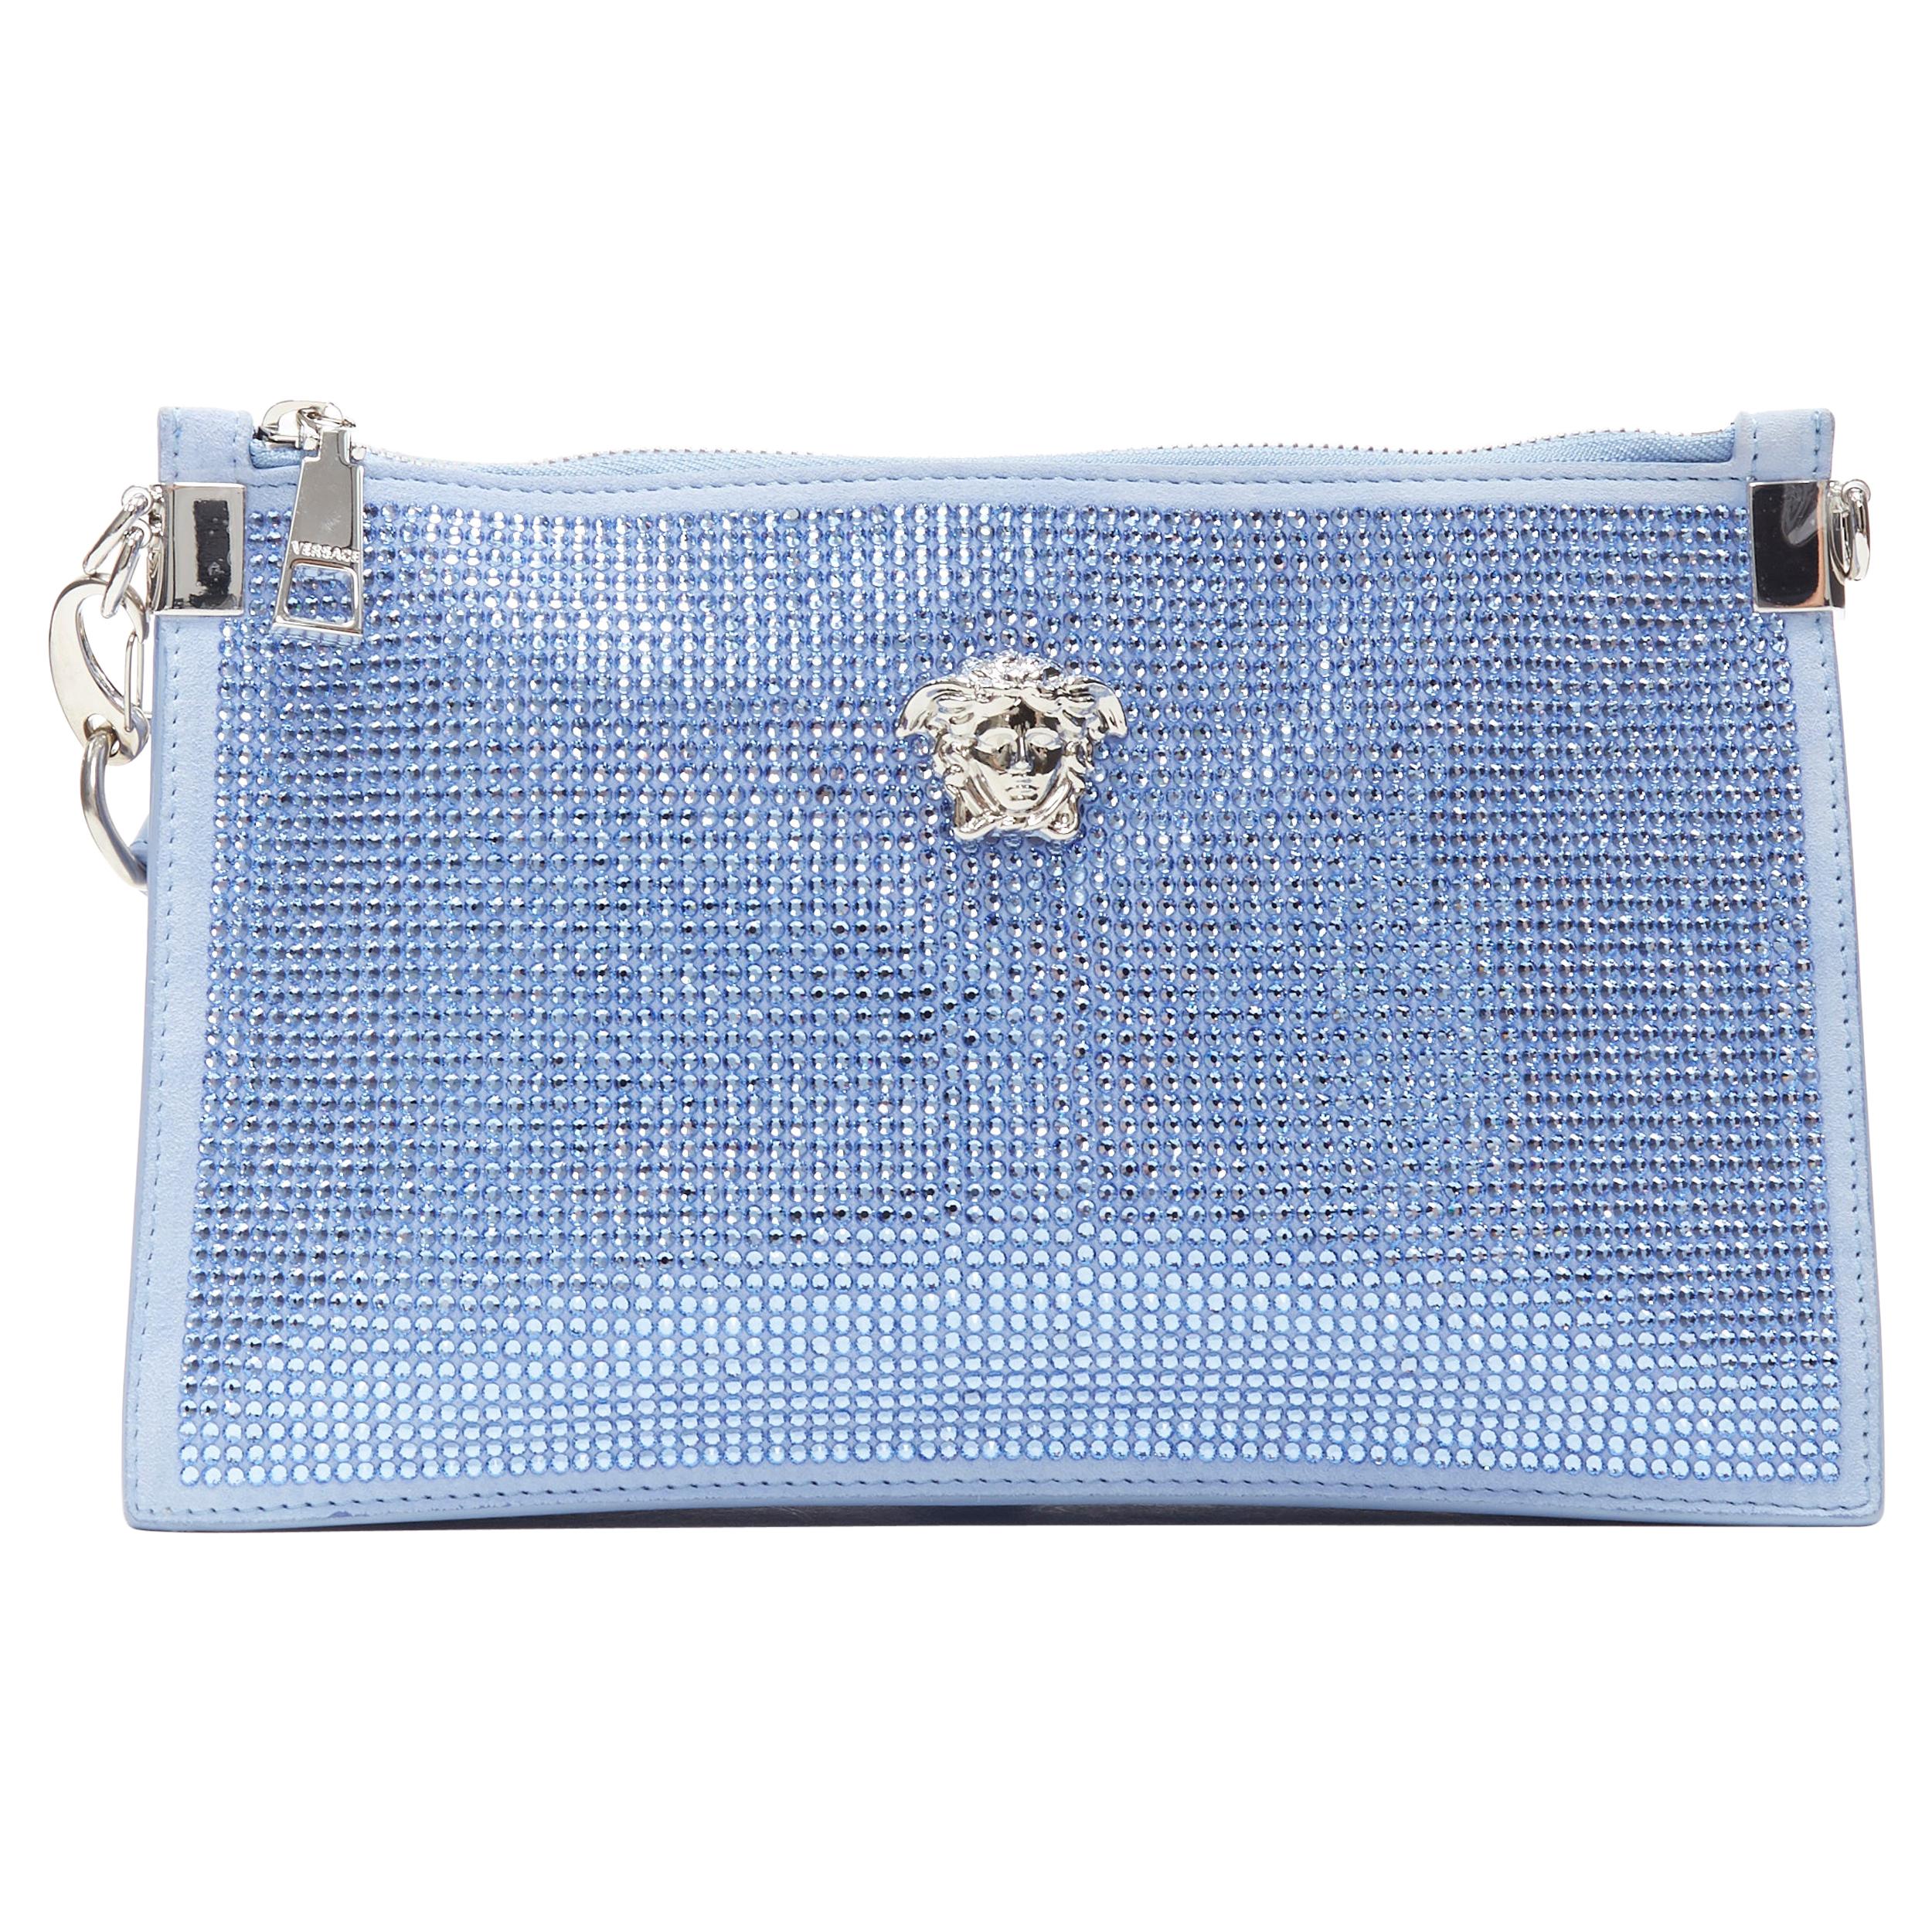 new VERSACE Palazzo Medusa blue crystal strass leather clutch crossbody bag